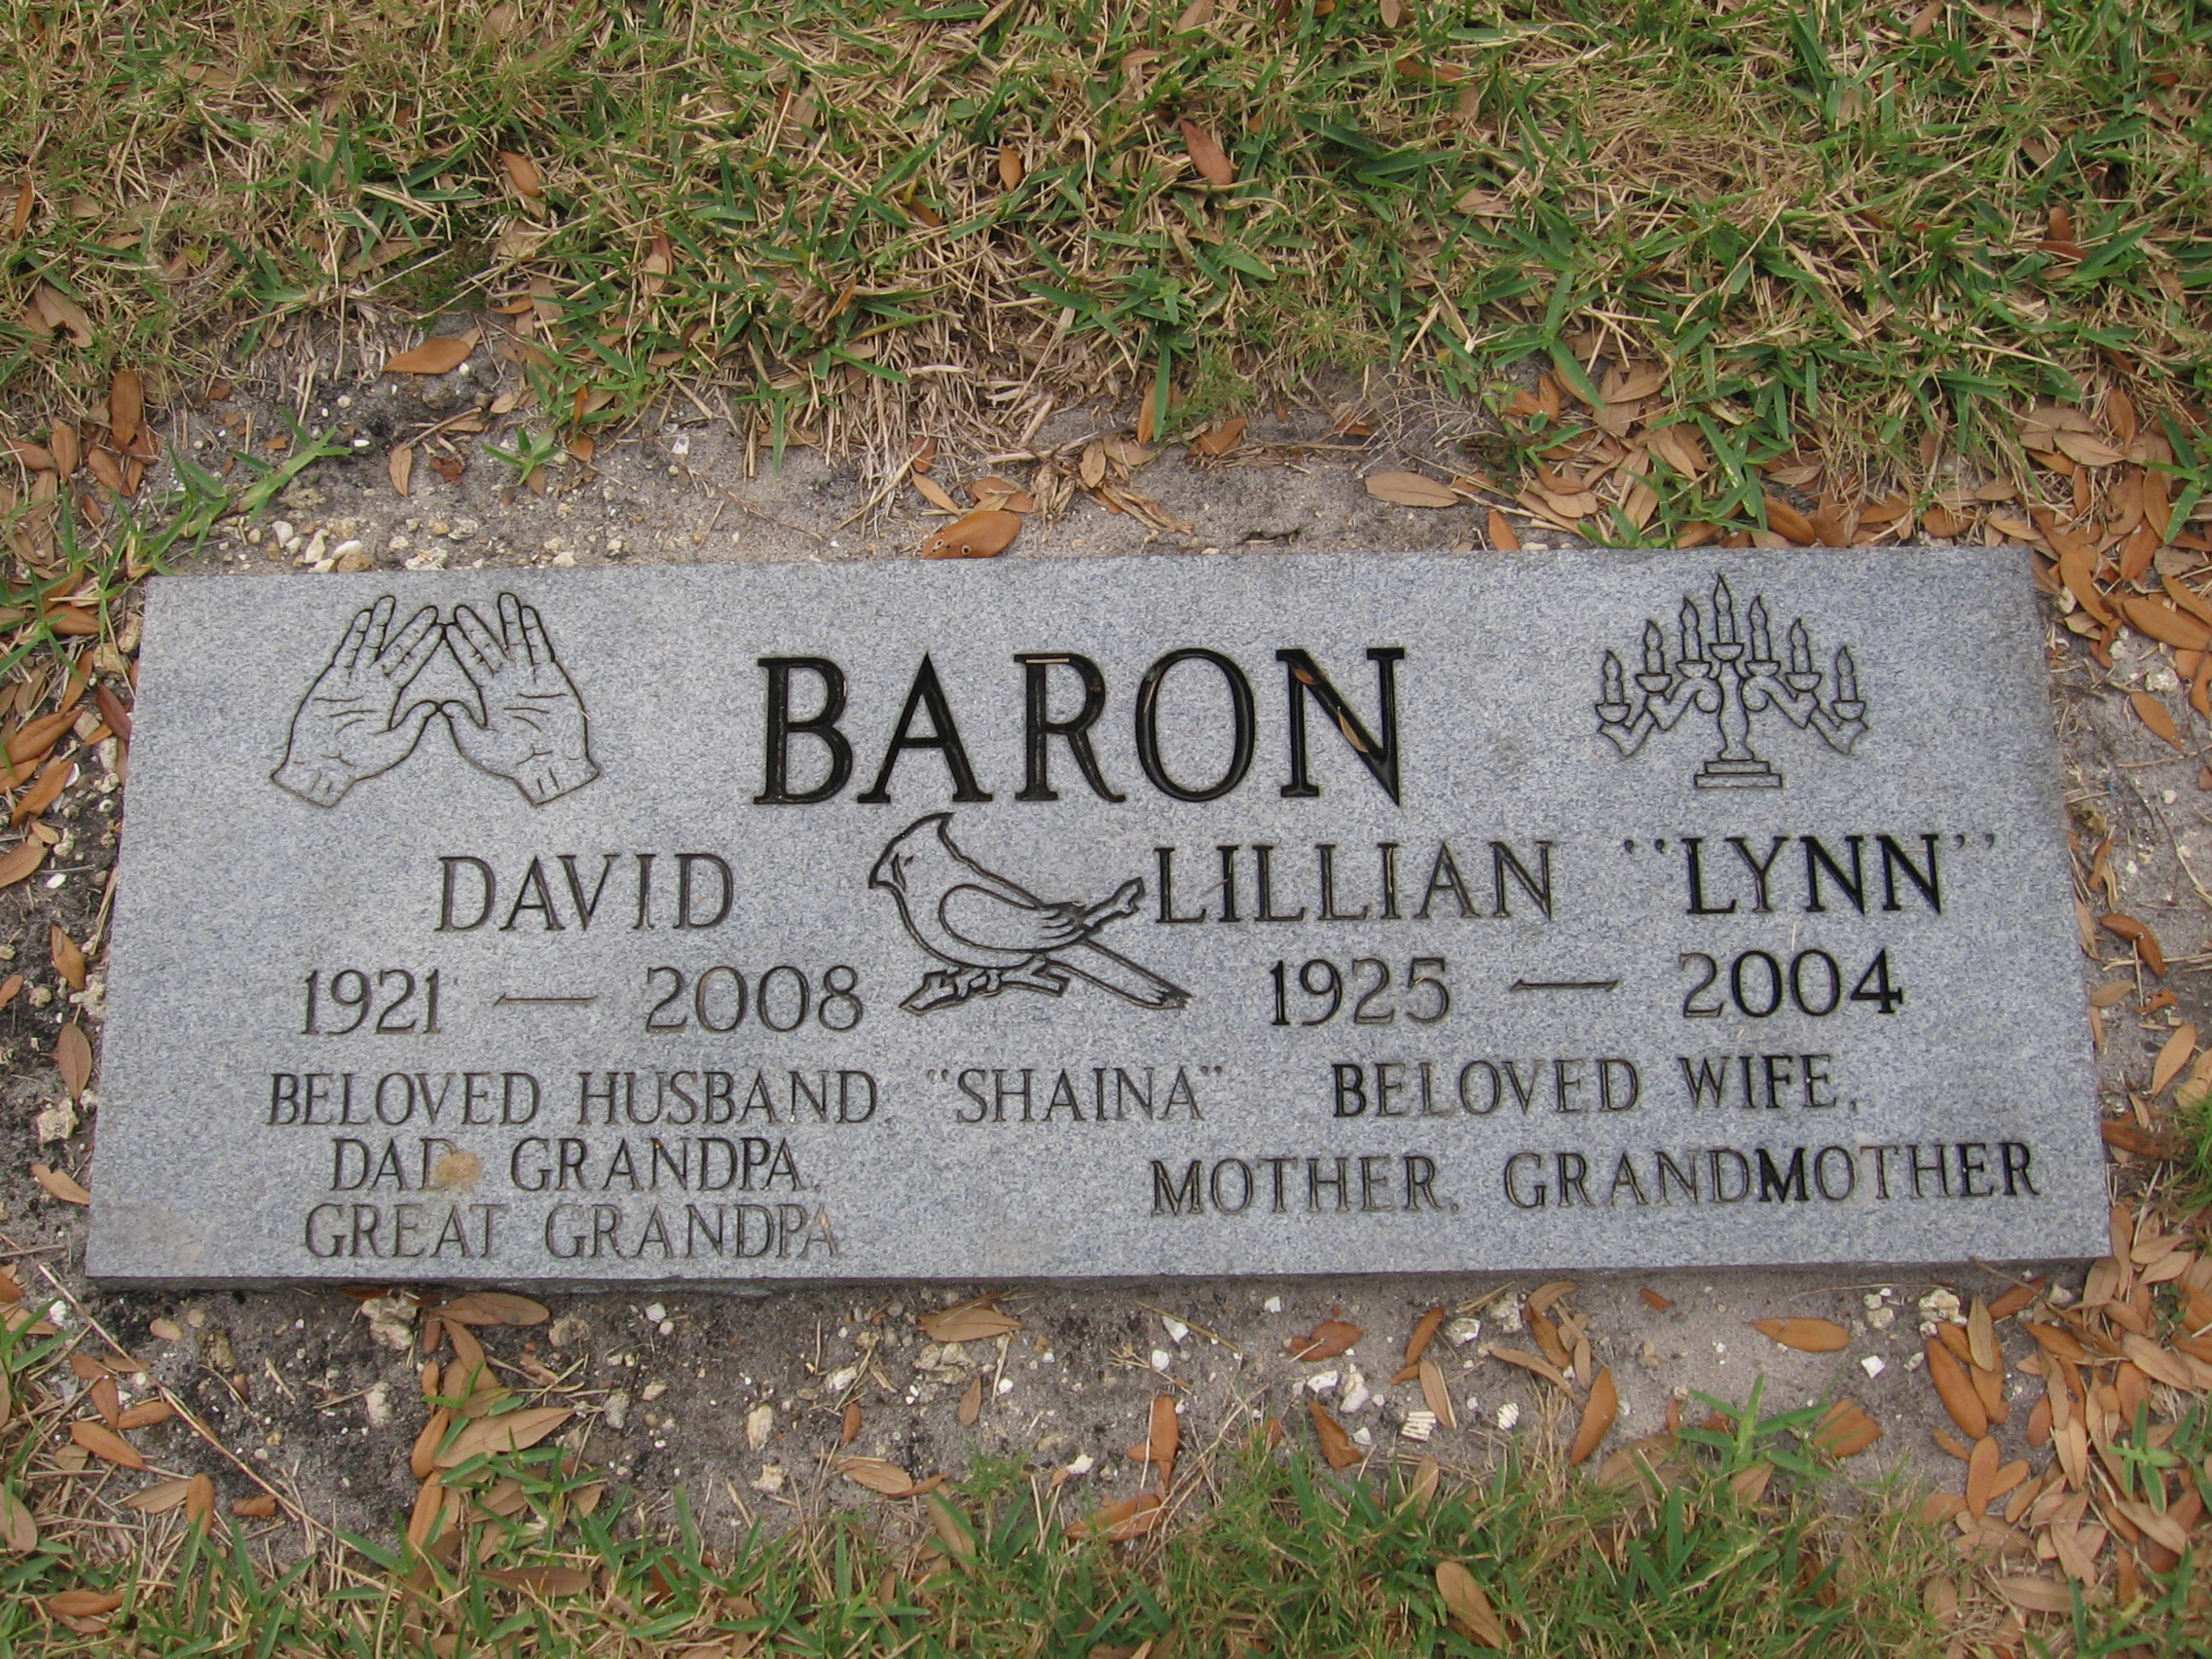 Lillian "Lynn" Baron